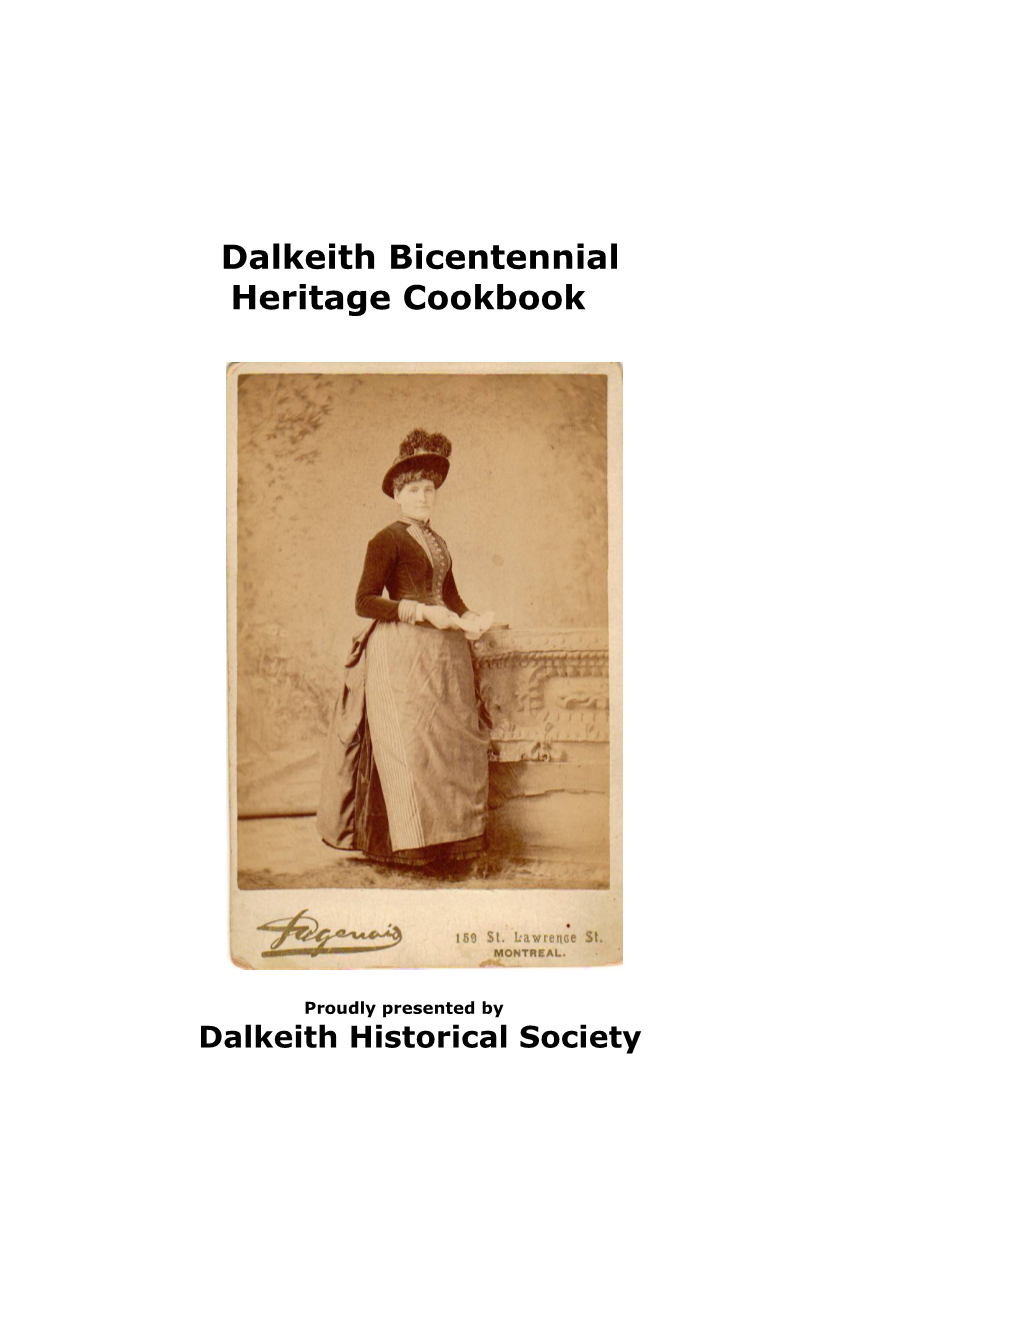 Dalkeith Bicentennial Heritage Cookbook